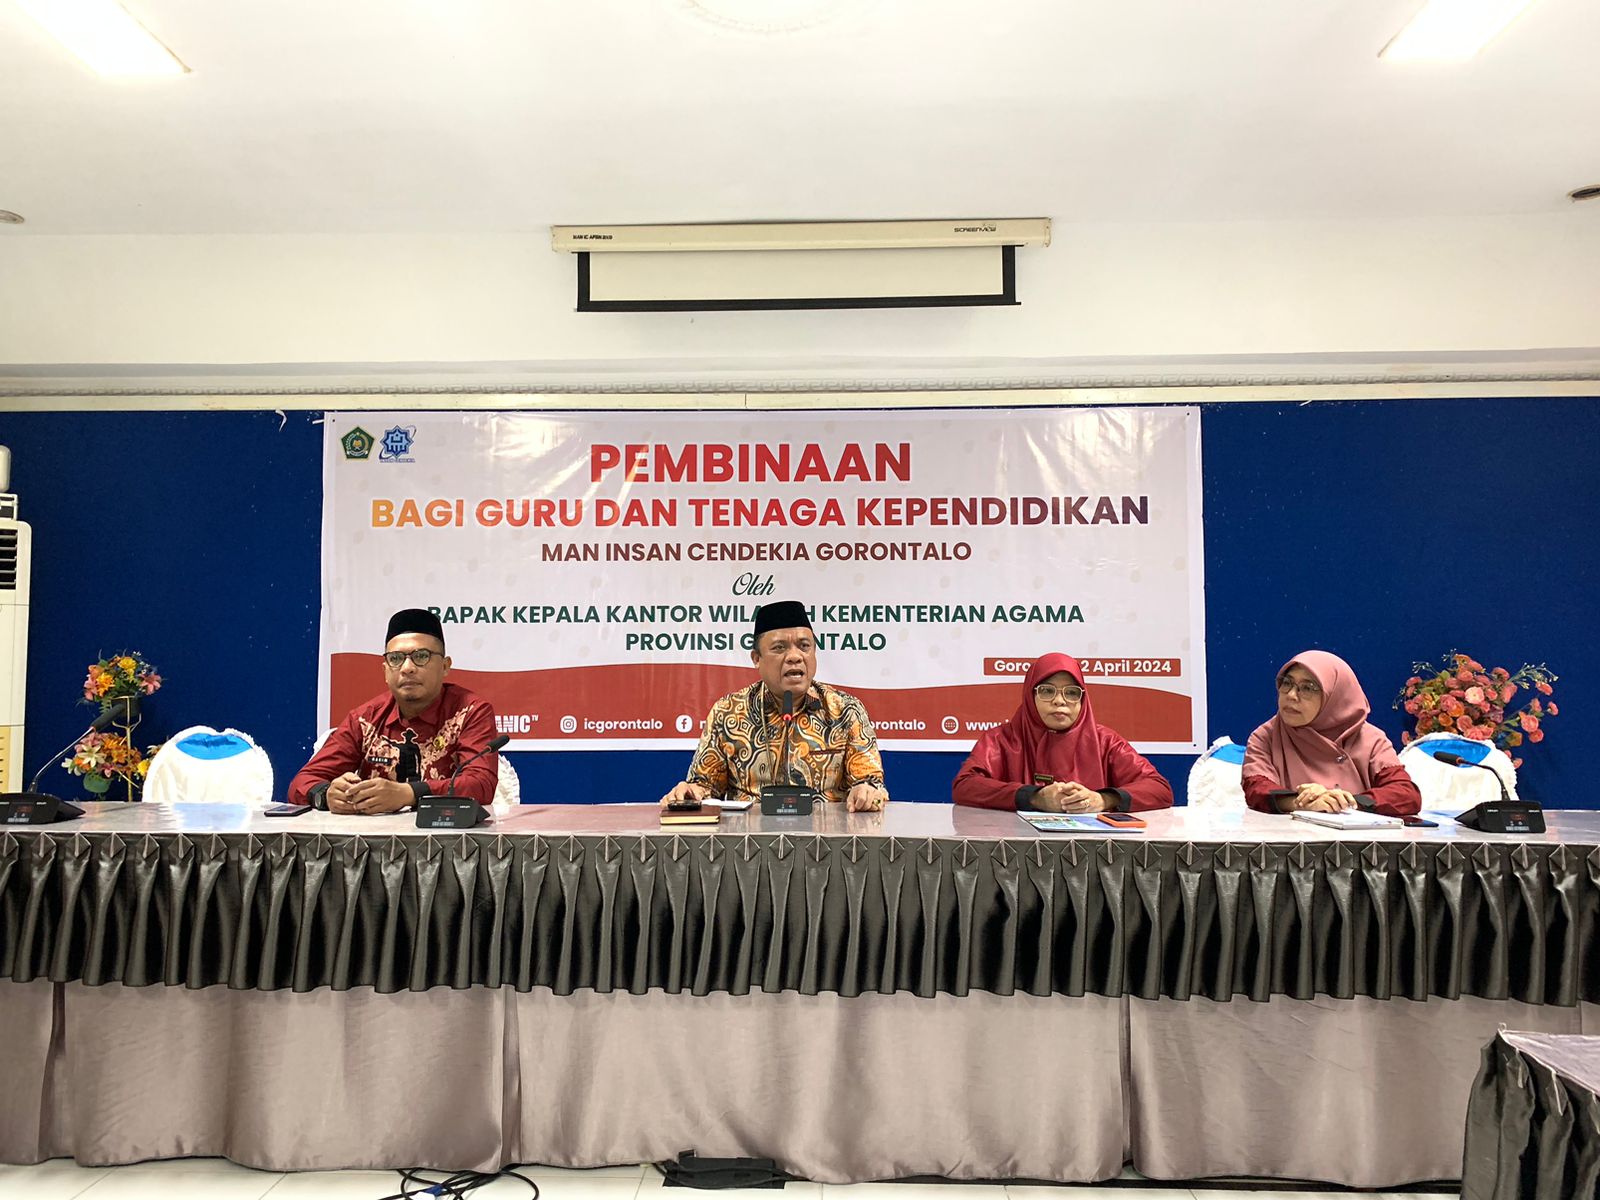 Pembinaan Kepala Kantor Wilayah Kementerian Agama Provinsi Gorontalo